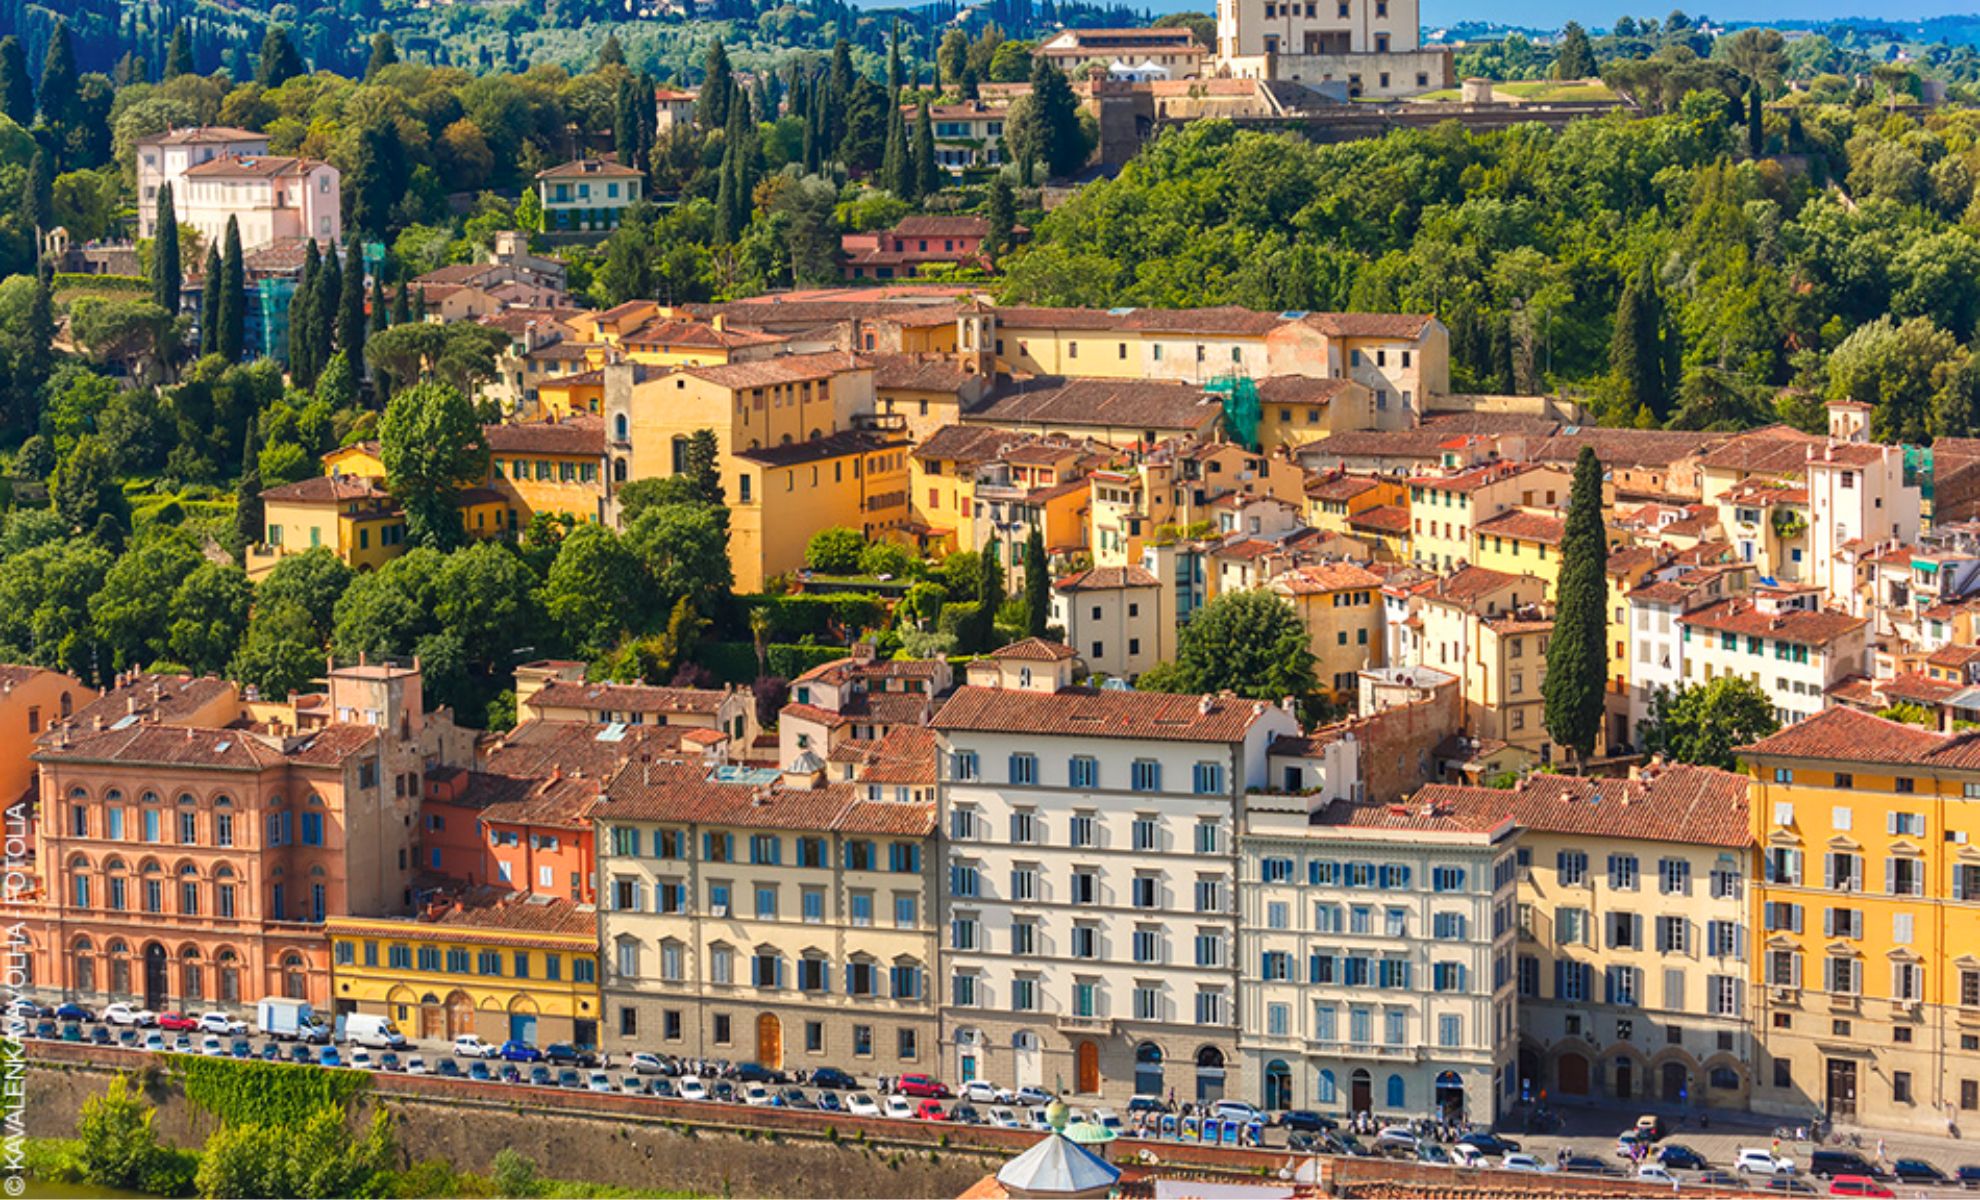 Le quartier historique Oltrarno,Florence, Italie